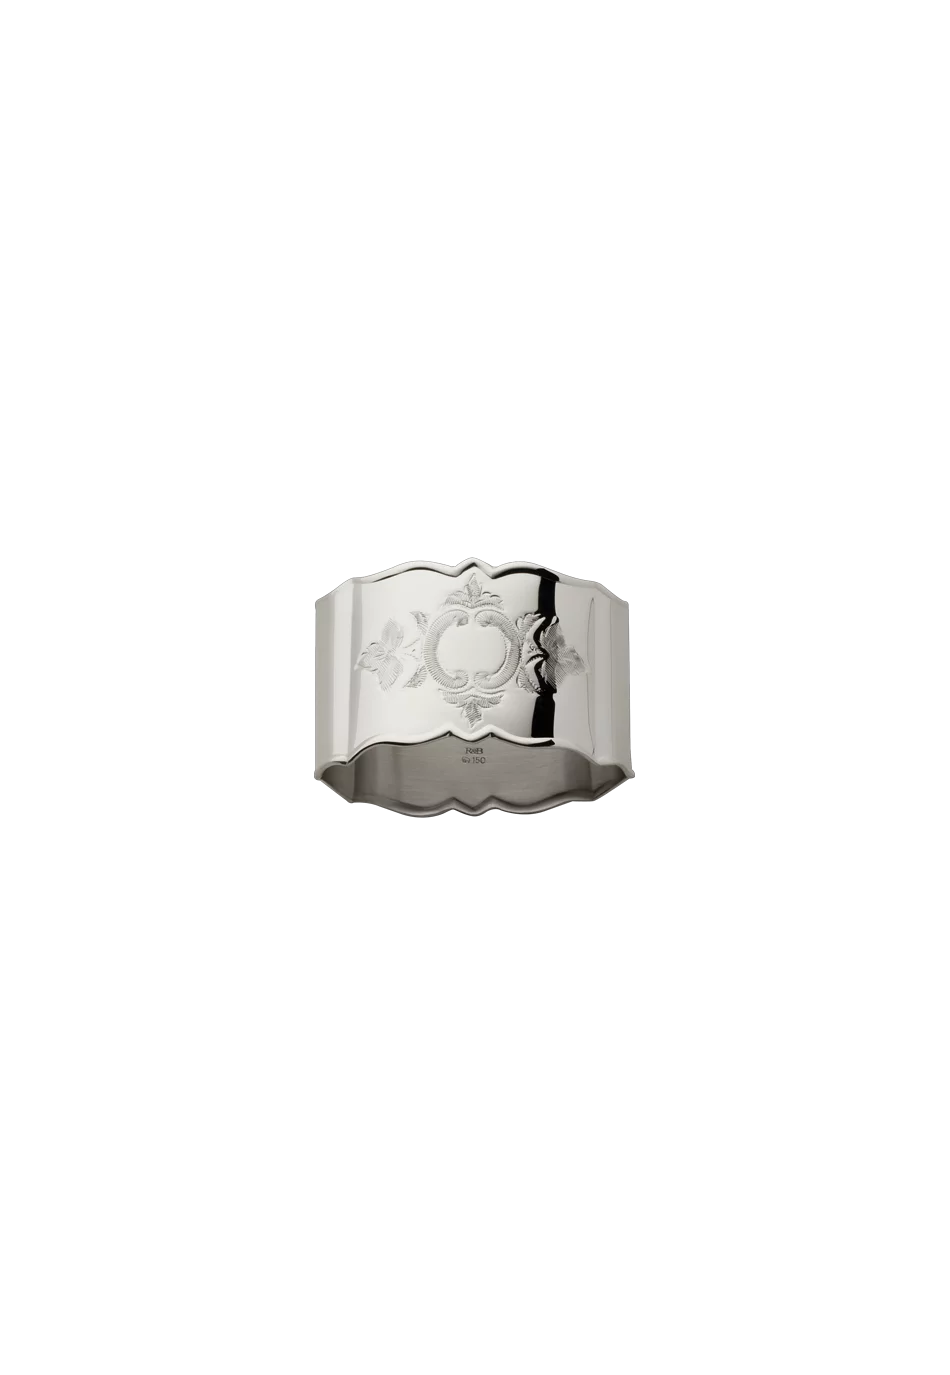 Ostfriesen Table Napkin Ring (150g massive silverplated)